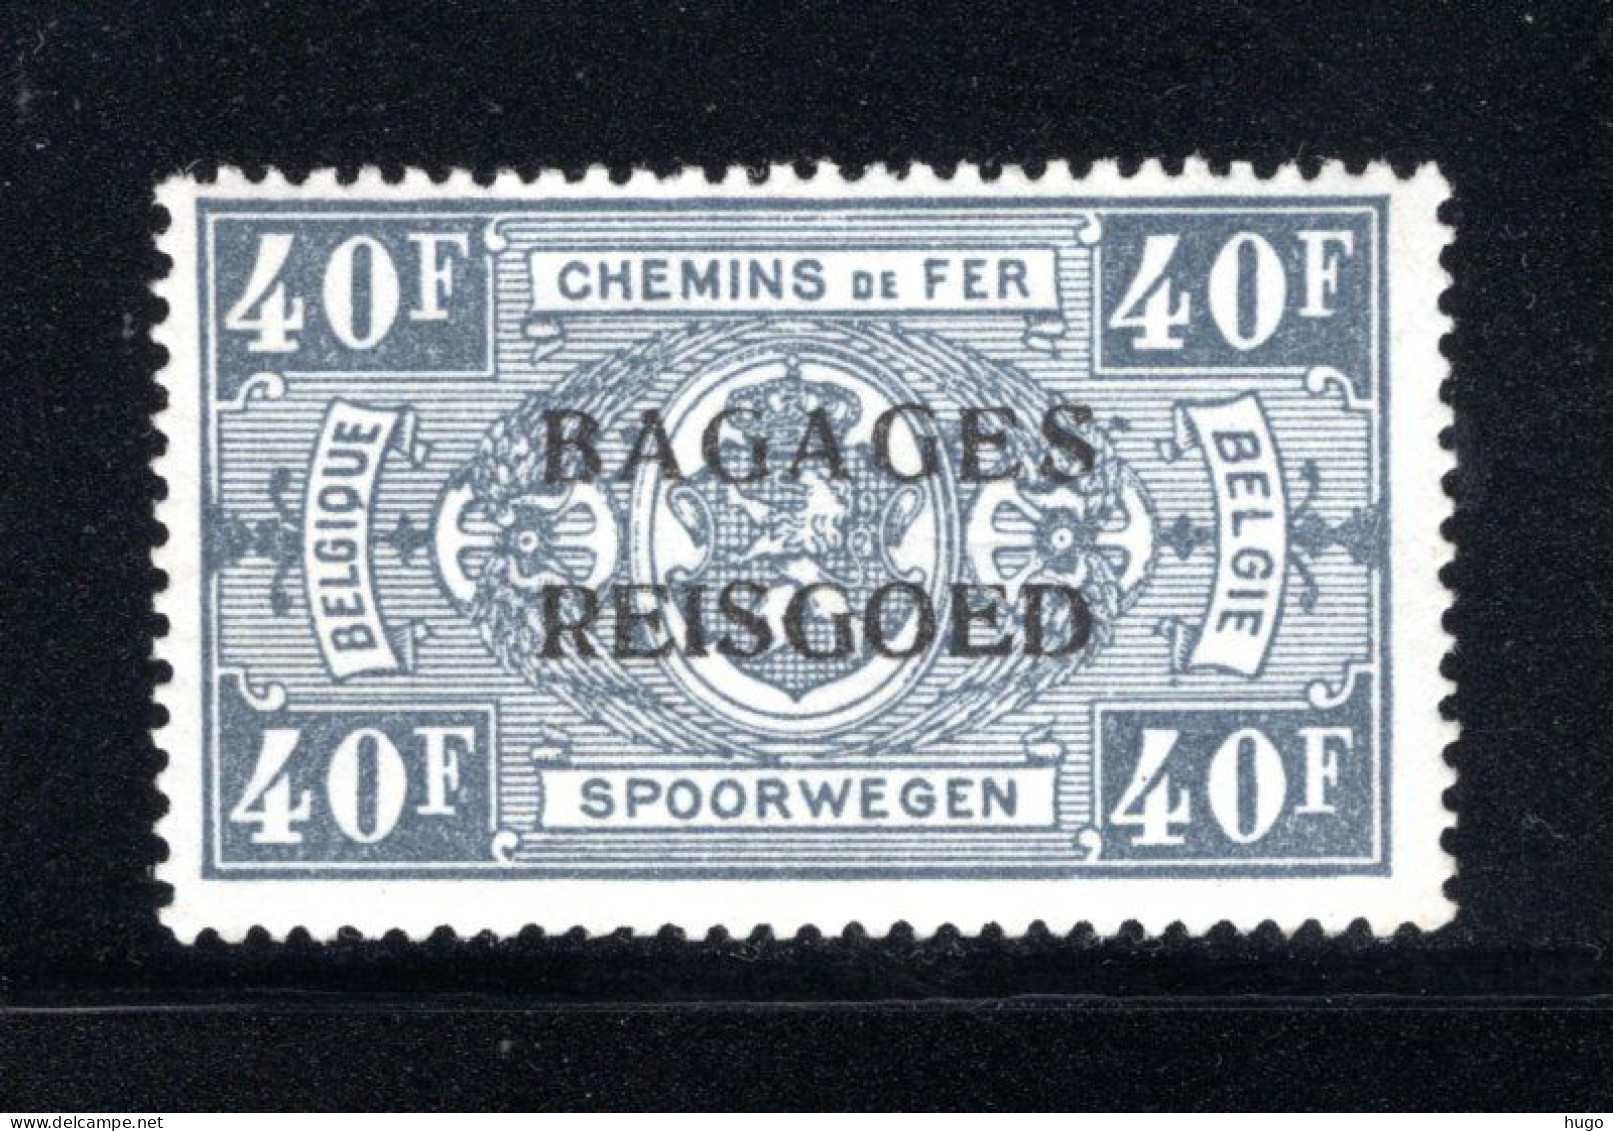 BA22 MNH 1935 - Spoorwegzegels BAGAGES - REISGOED - Luggage [BA]